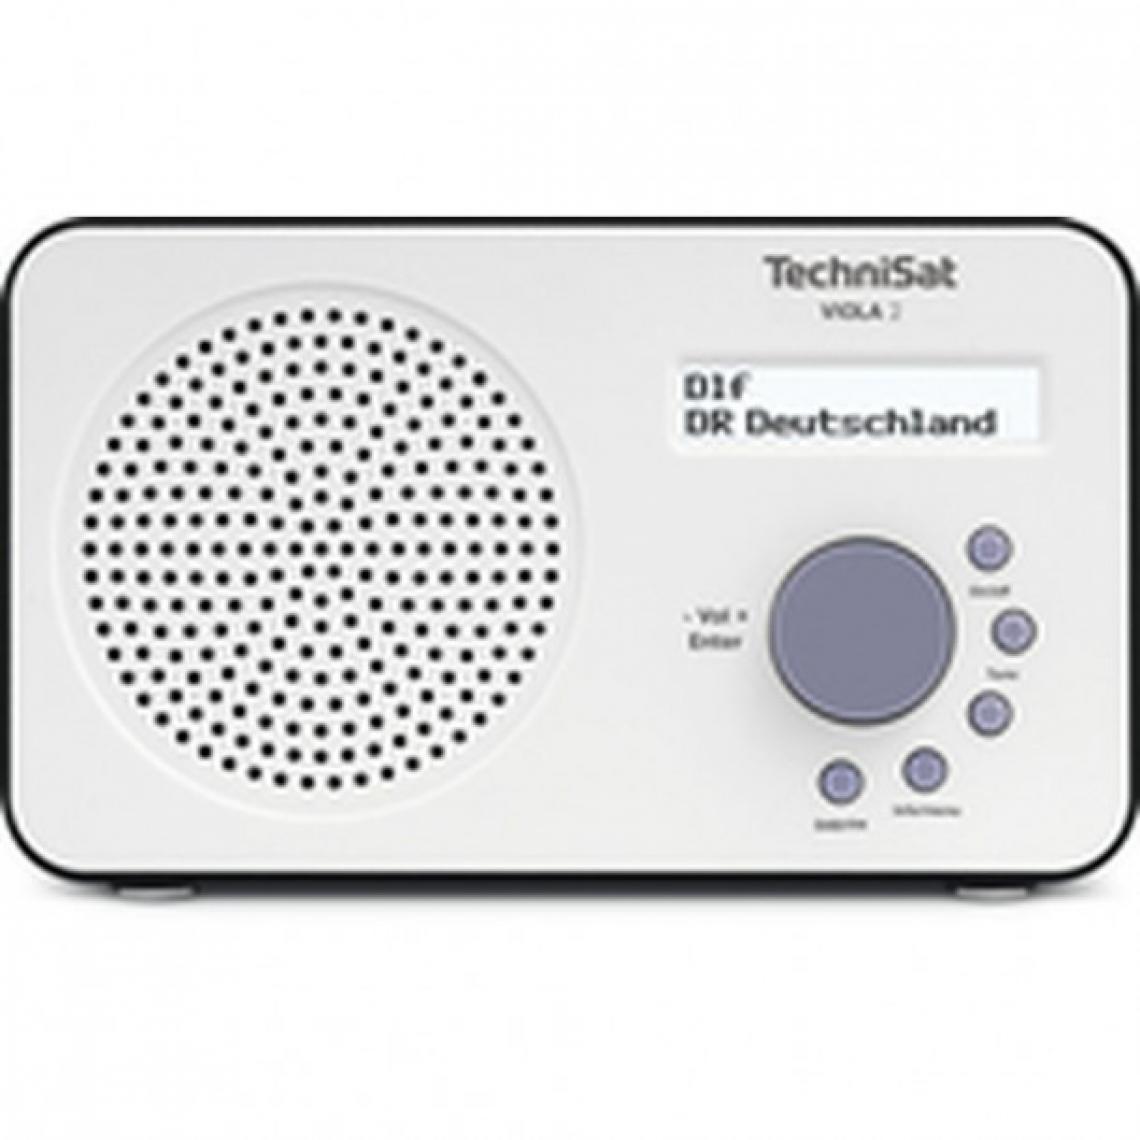 Technisat - Radio transistor VIOLA 2 DAB Blanc/Noir (Reconditionné A+) - Radio